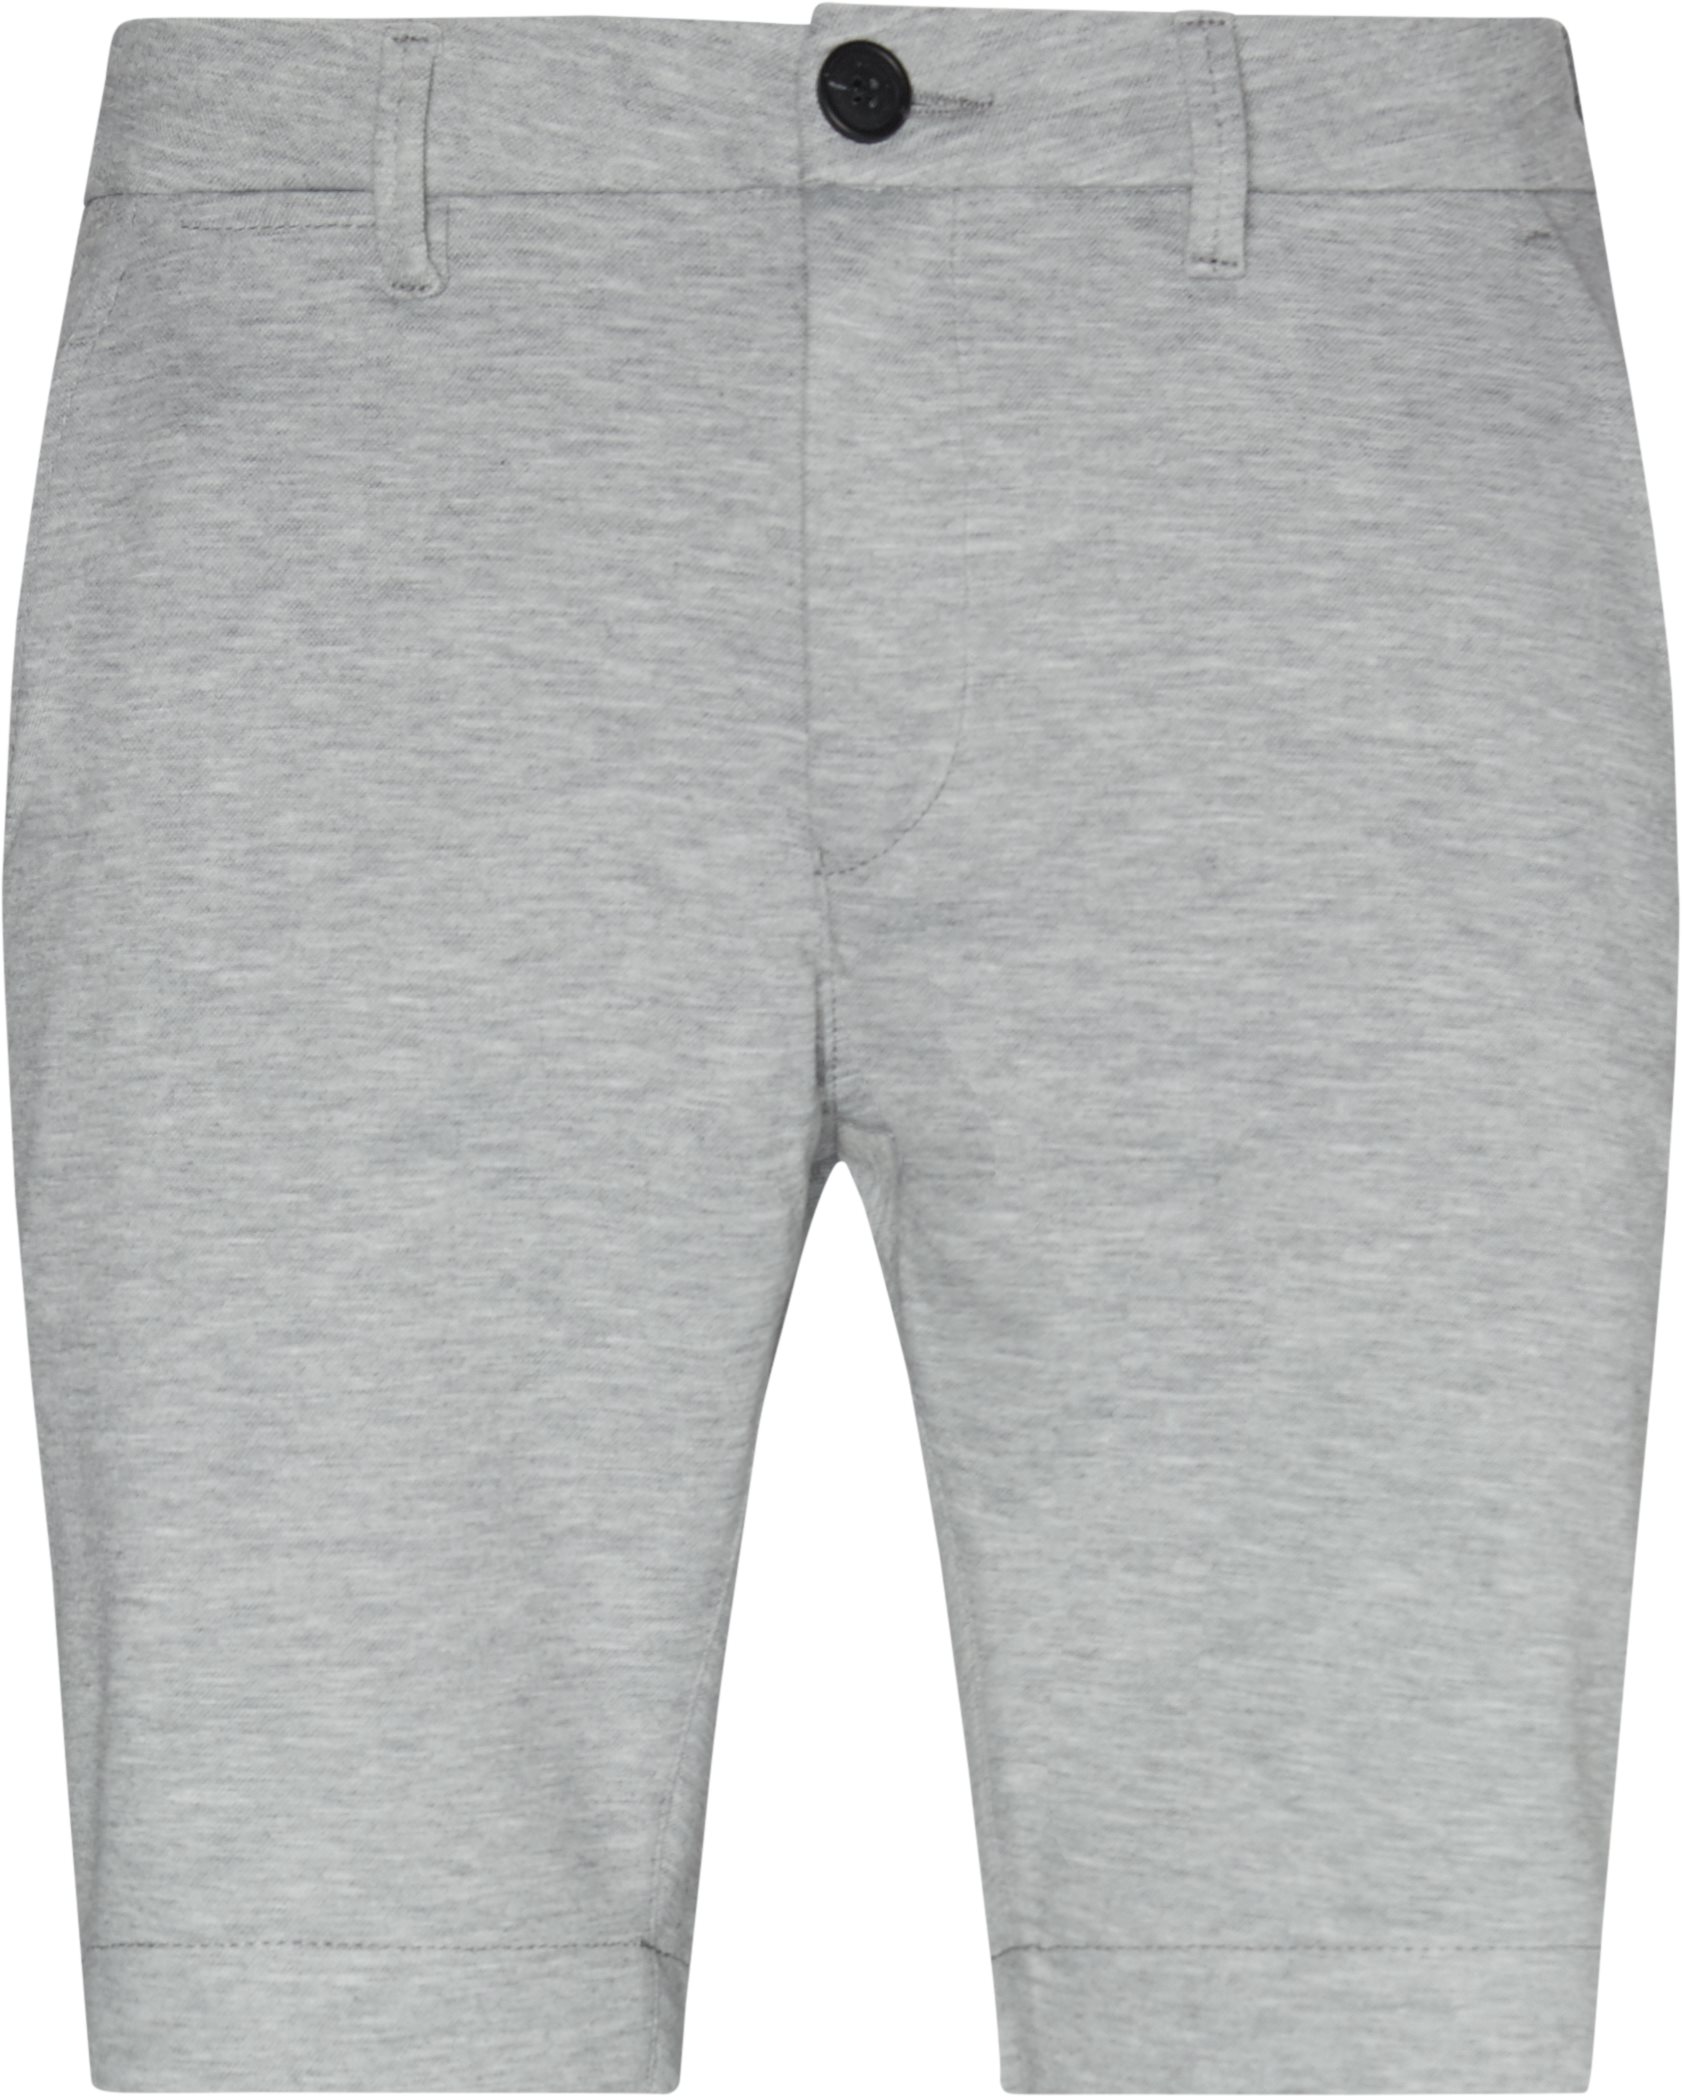 Jason Chino Jersey Shorts - Shorts - Regular fit - Grå